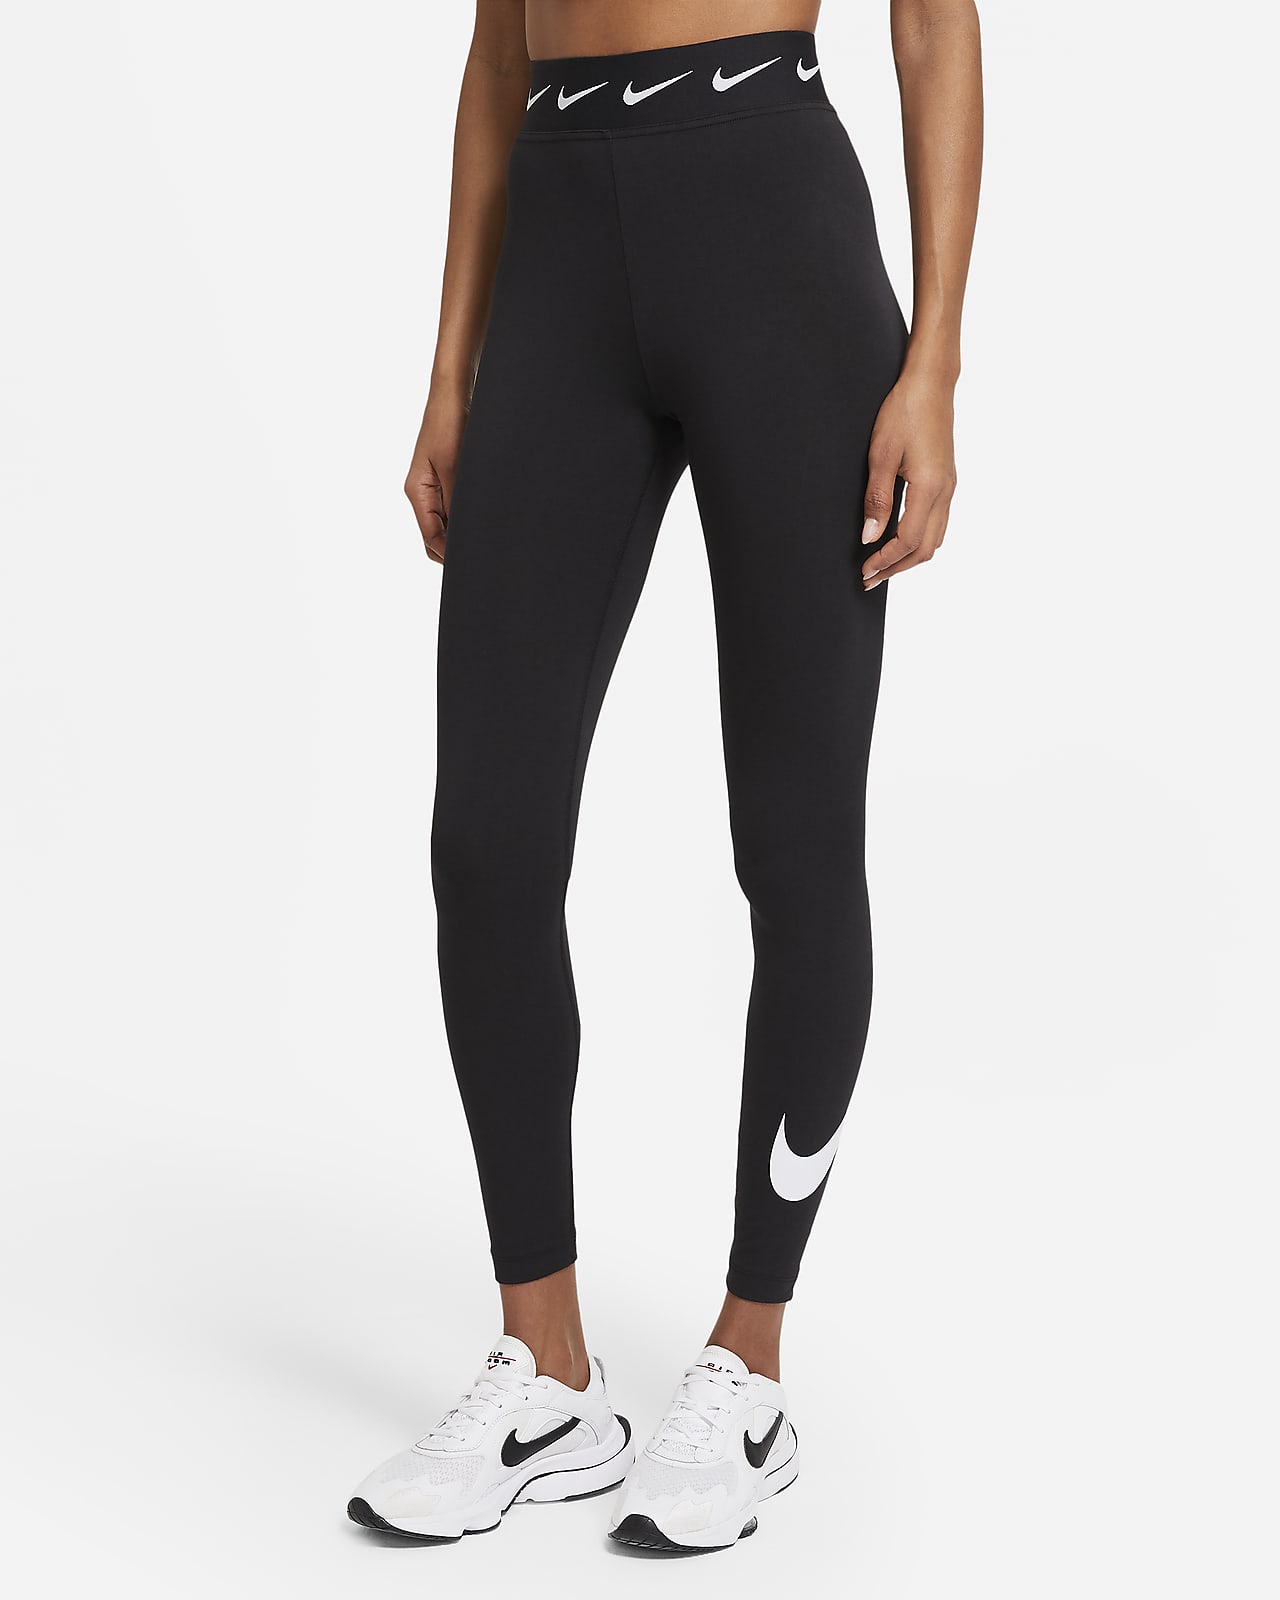 Legging taille haute à motif Nike Sportswear Club pour Femme